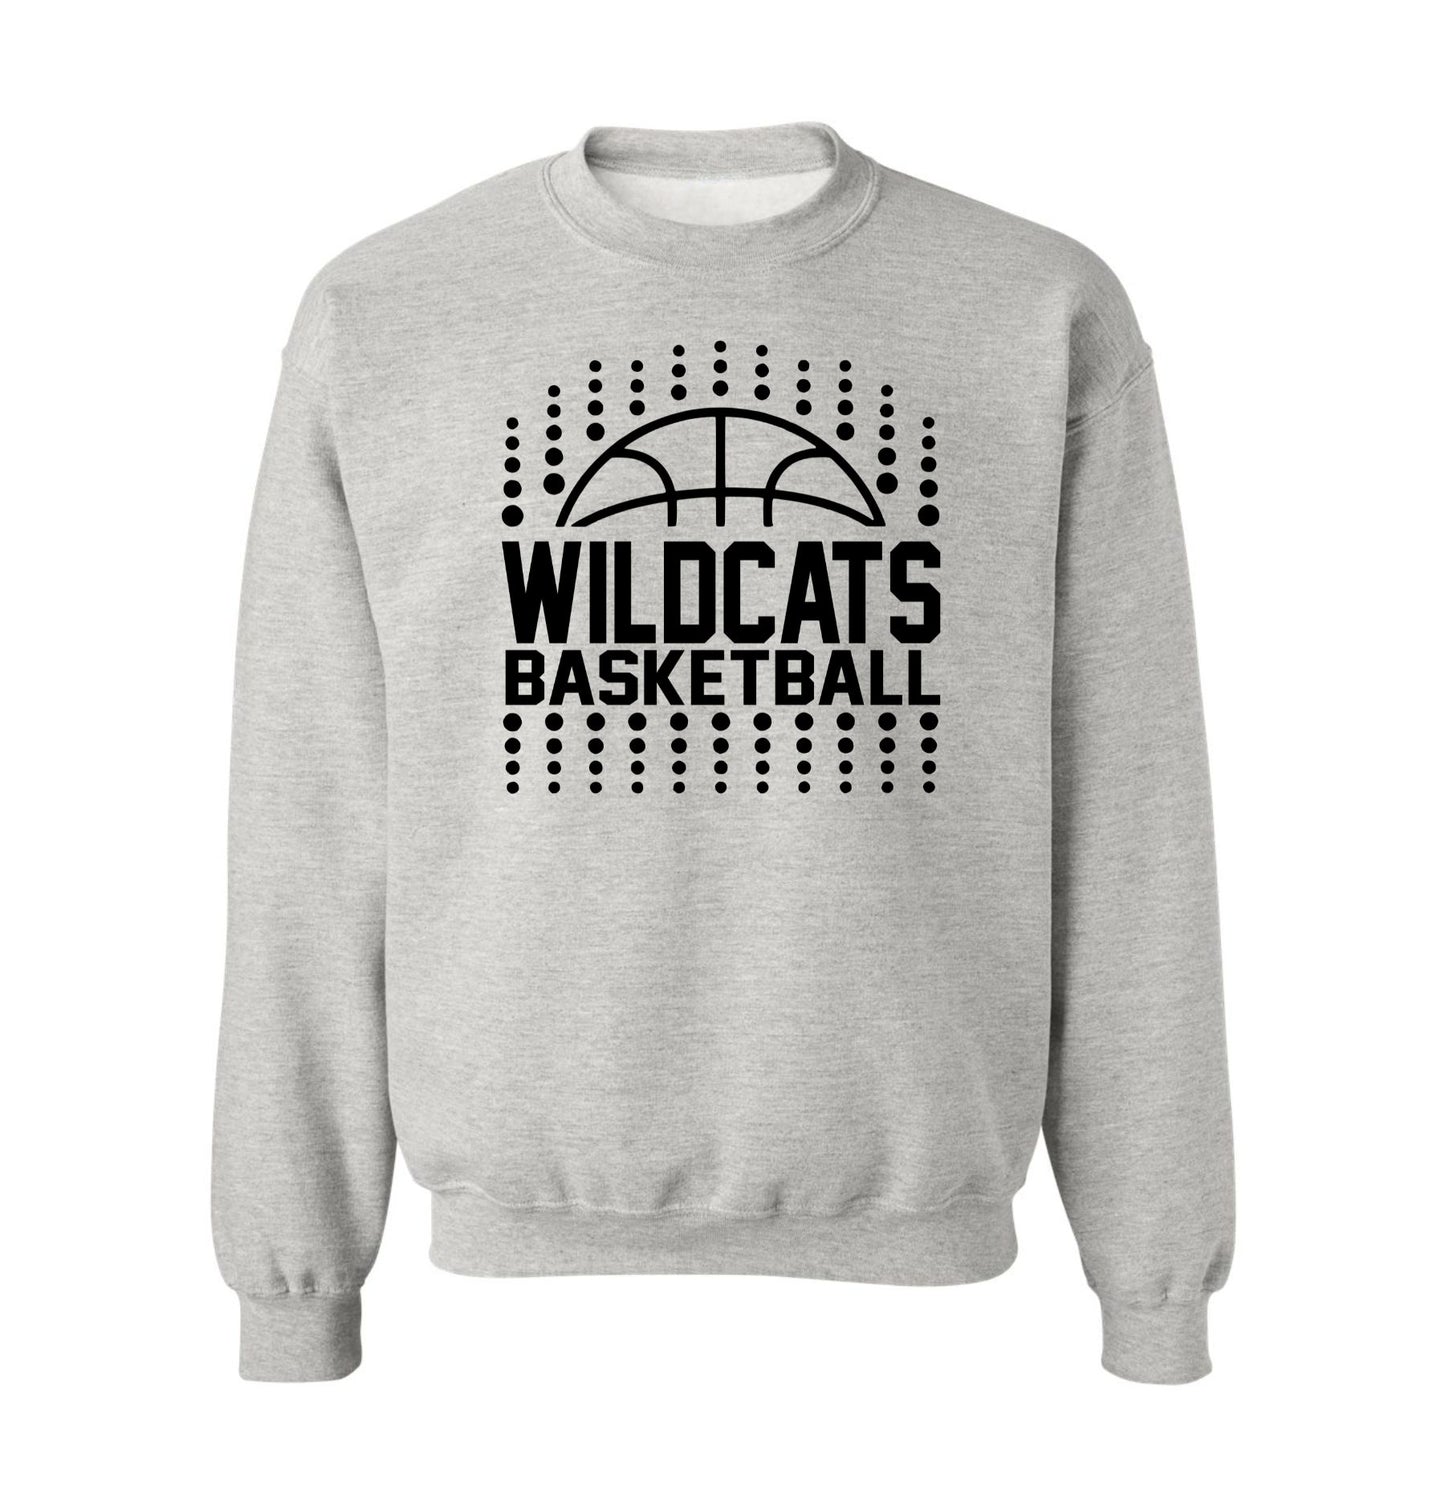 Wildcats Basketball - Crew Sweatshirts - Black and White